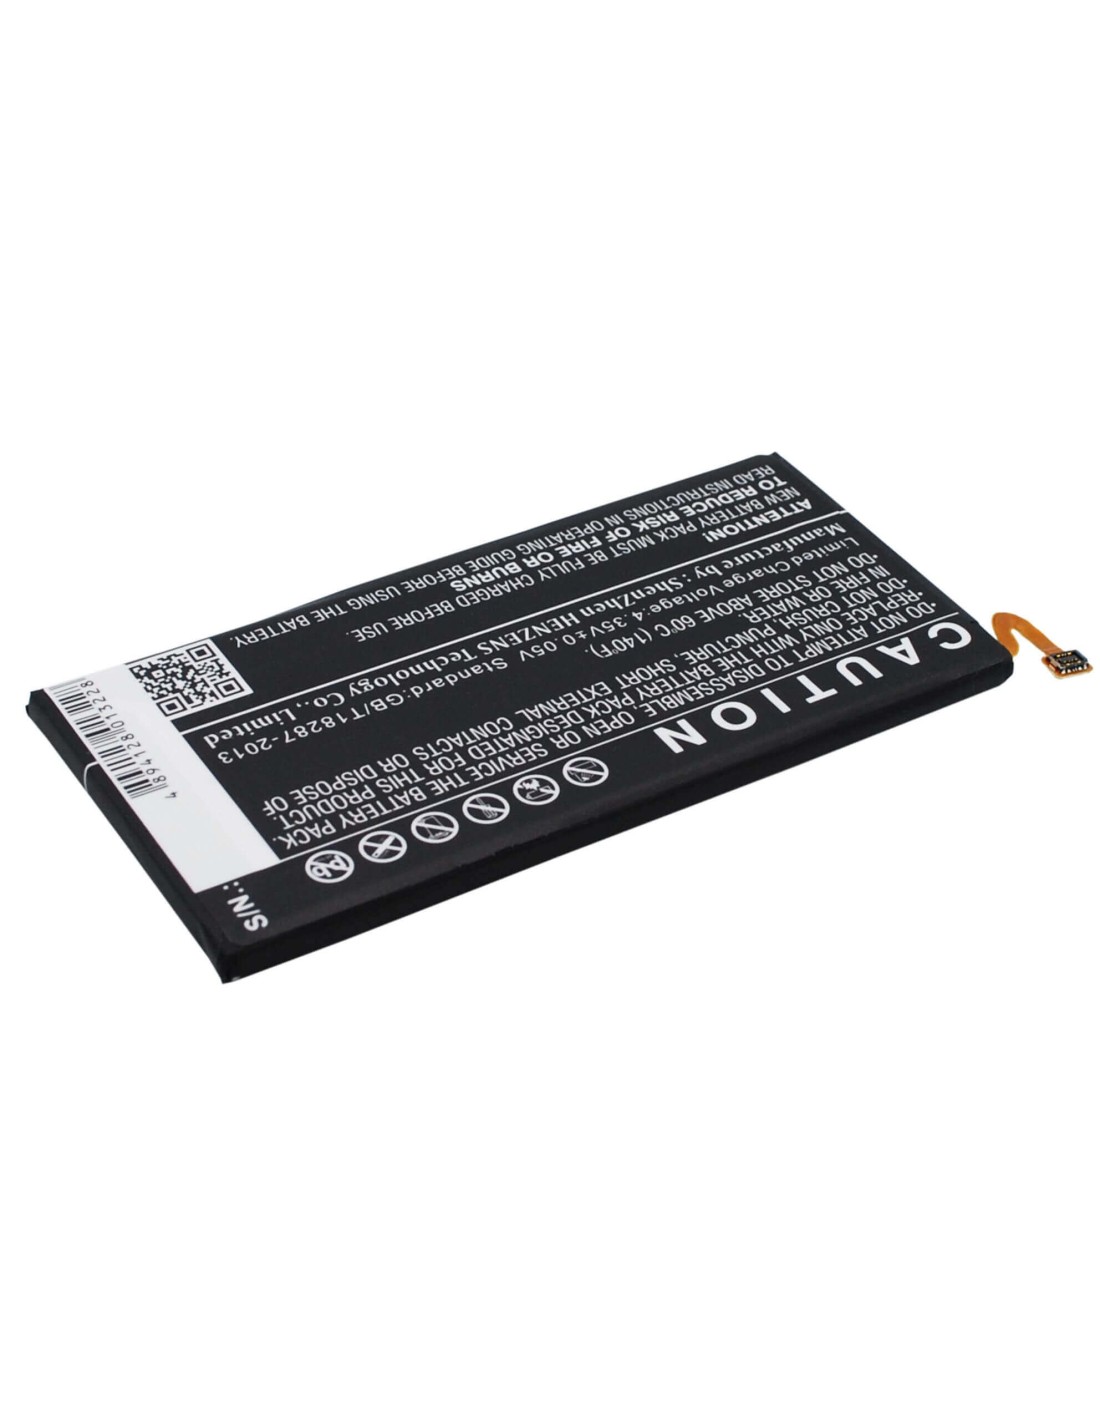 Battery for Samsung Galaxy A7, SM-A700F, SM-A700FD 3.8V, 2600mAh - 9.88Wh